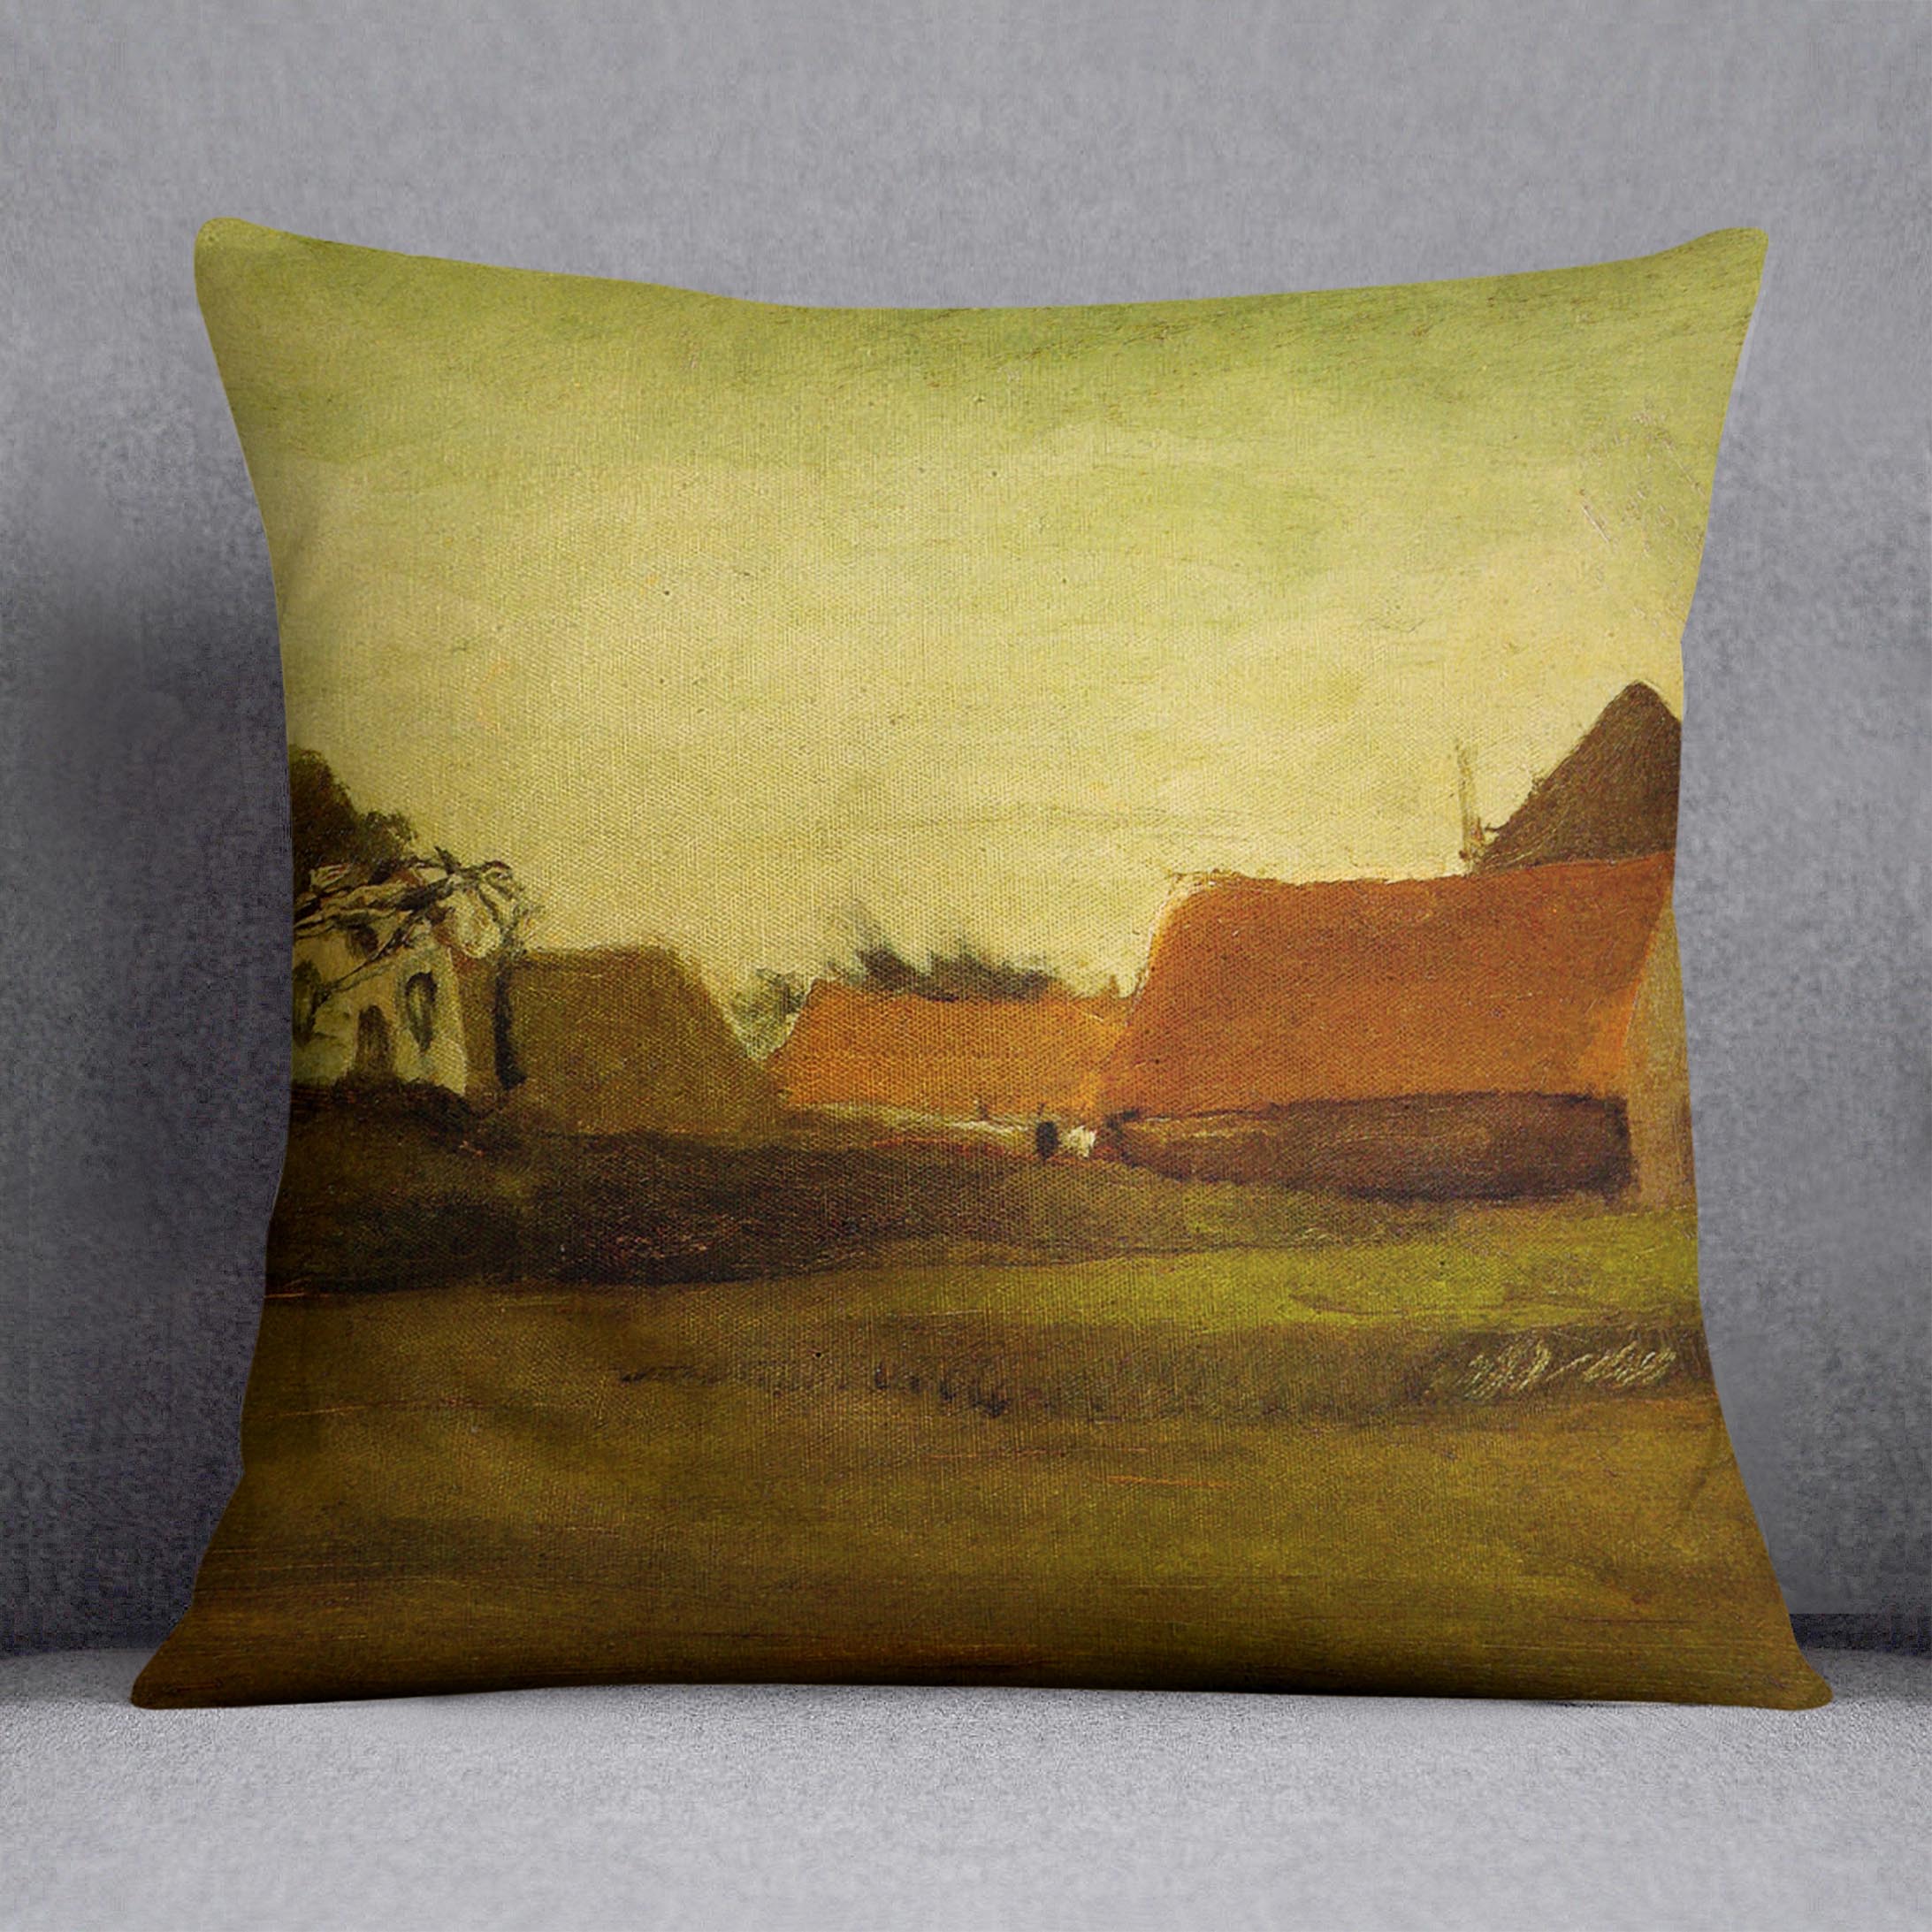 Farmhouses in Loosduinen near The Hague at Twilight by Van Gogh Cushion